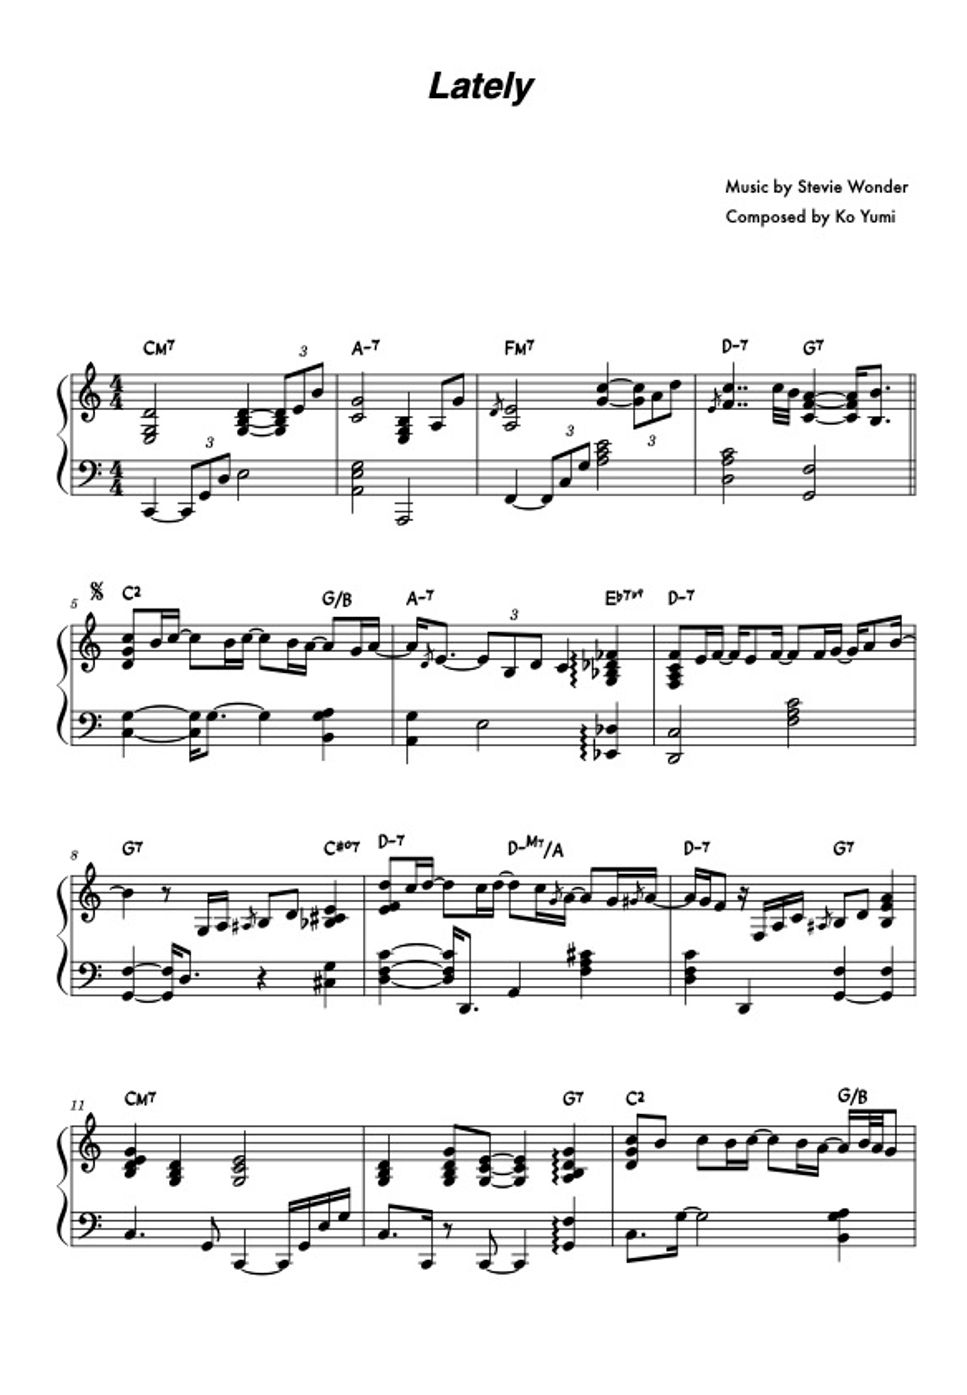 Stevie Wonder - Lately (piano solo) by KoYumi Music